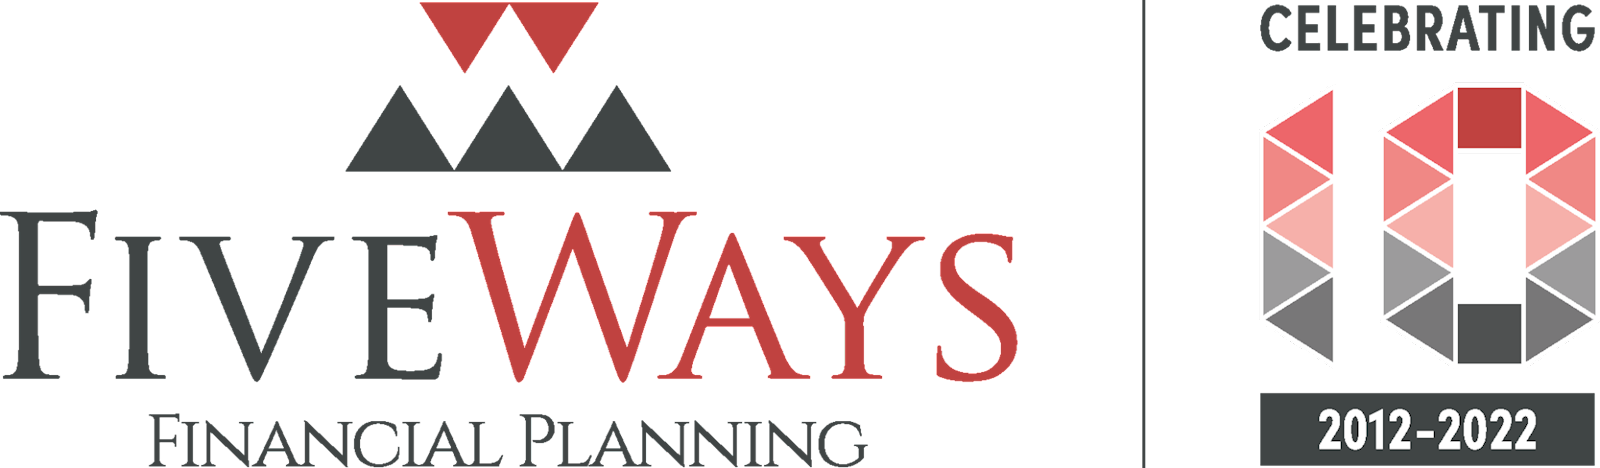 FiveWays Financial Planning 